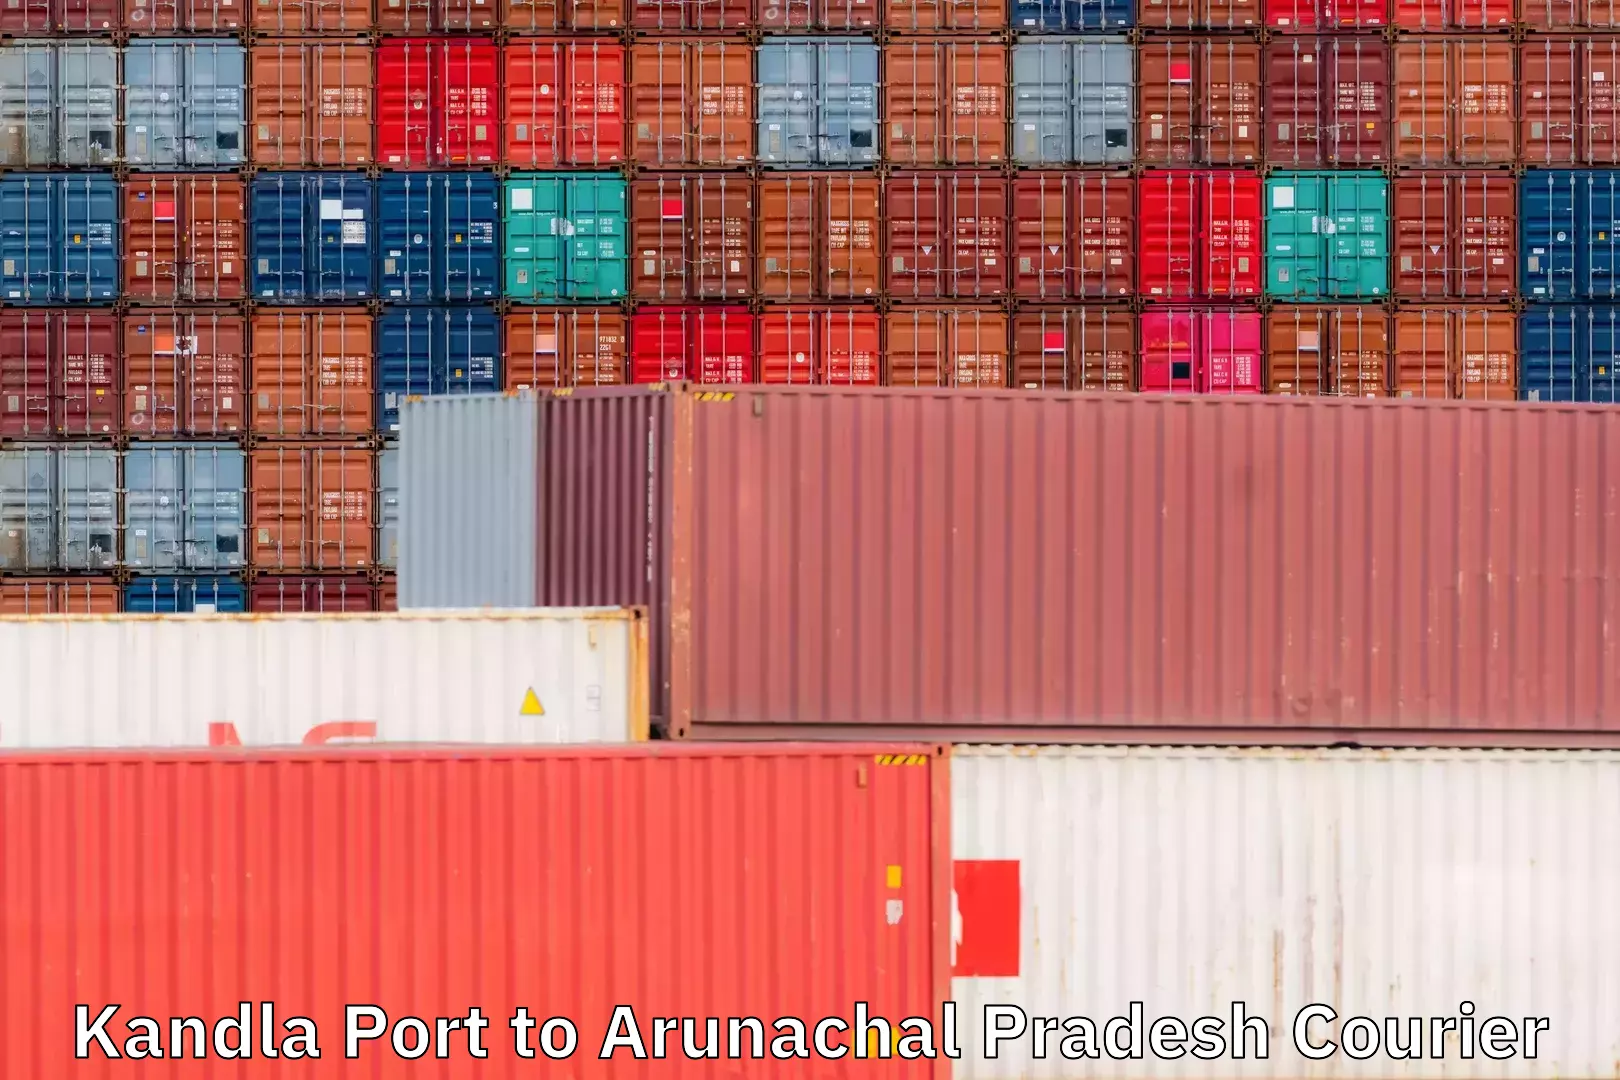 Ground shipping in Kandla Port to Arunachal Pradesh